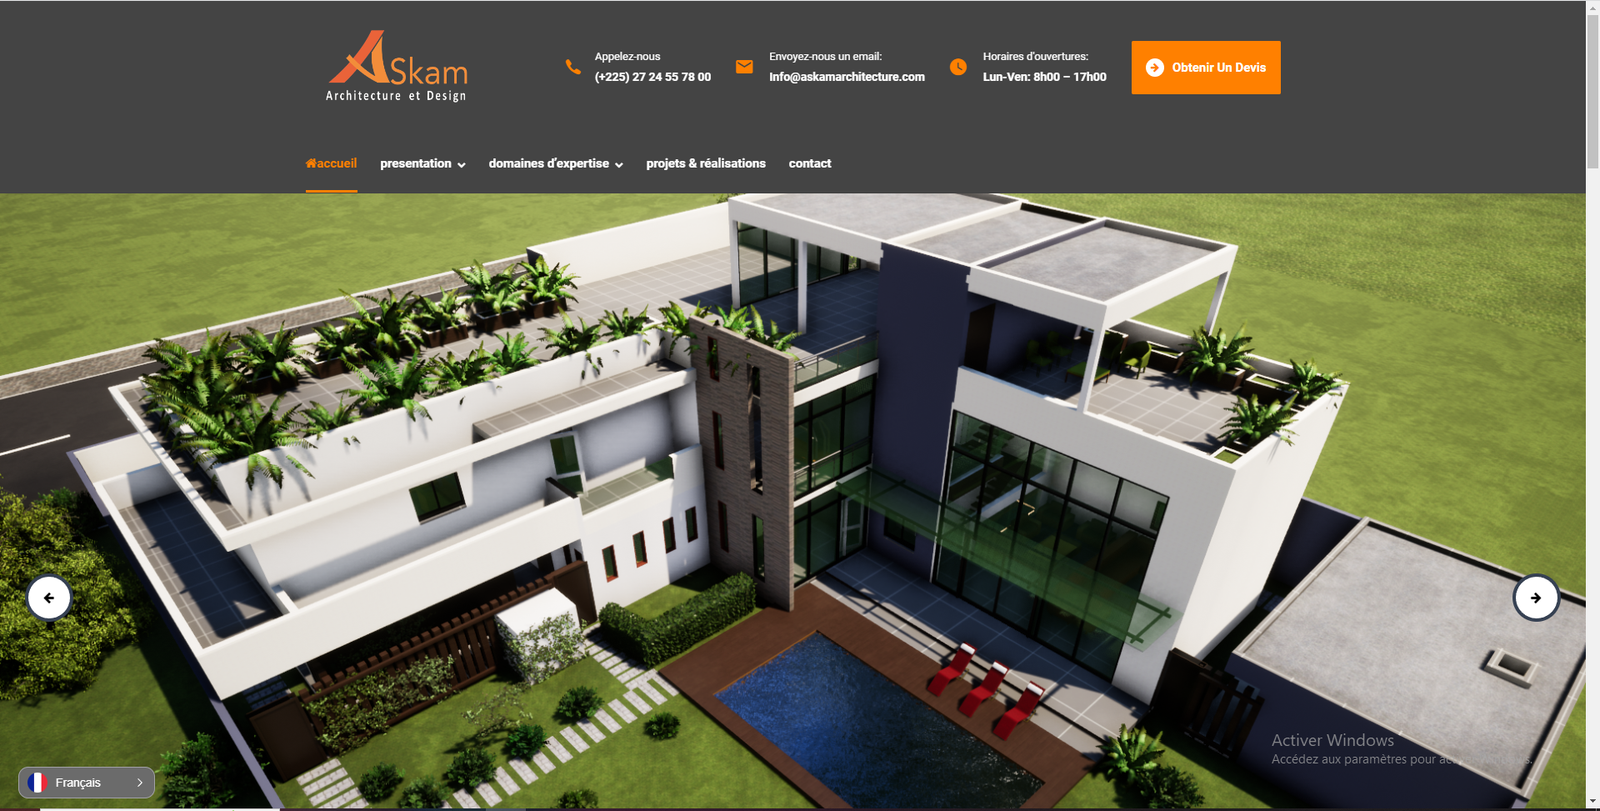 Askam Architecture & Design